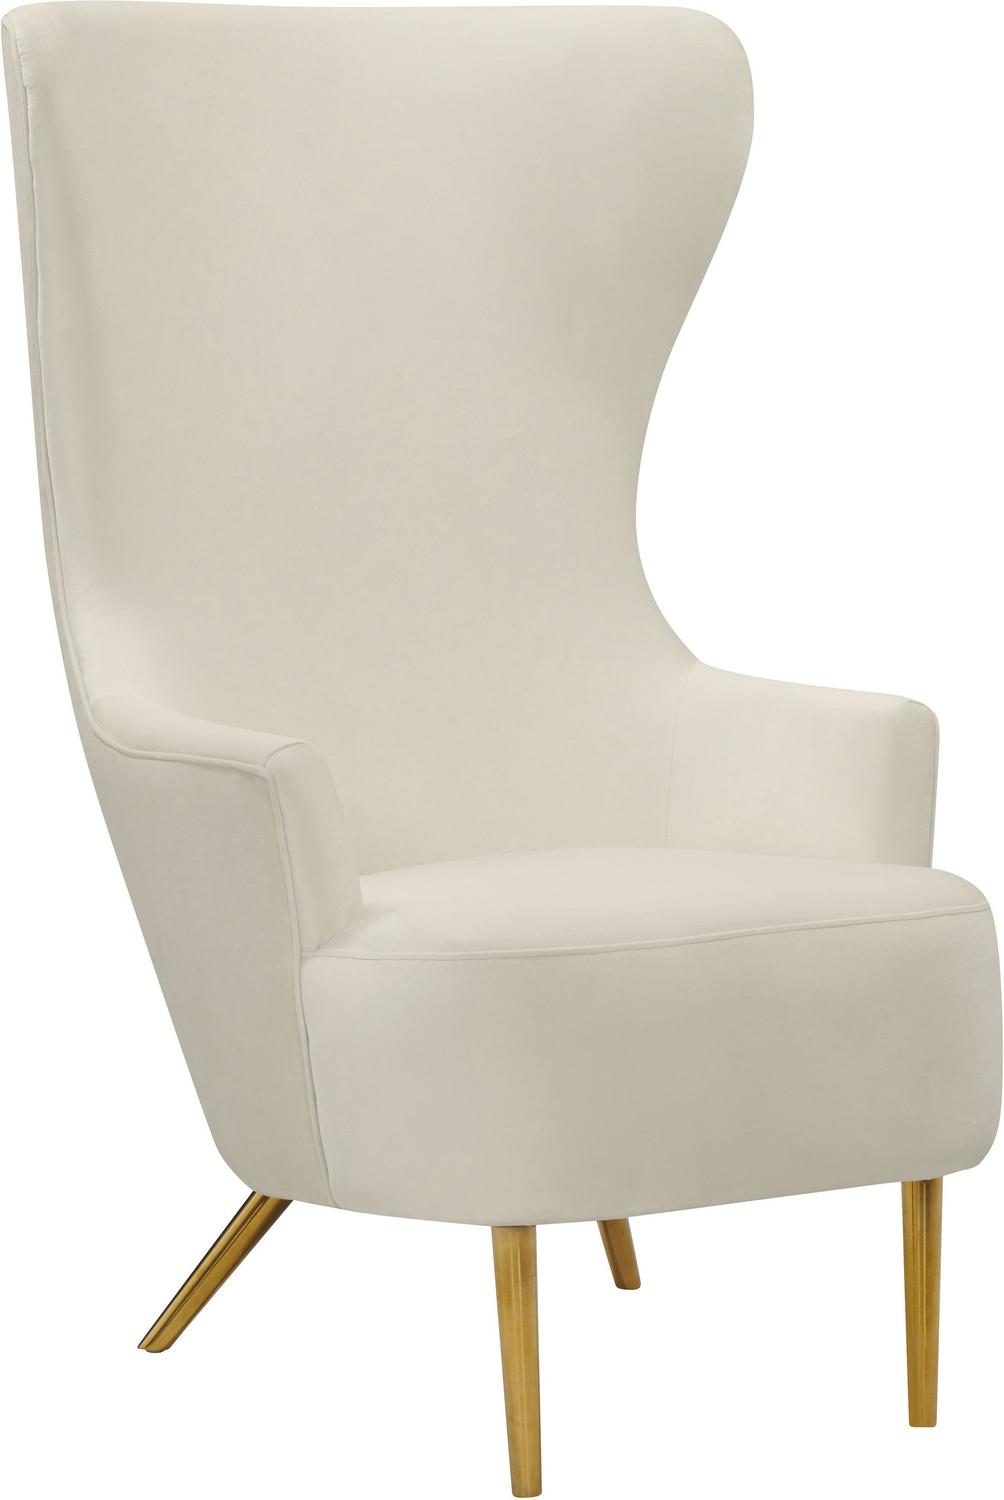 modern grey armchair Tov Furniture Accent Chairs Chairs Cream